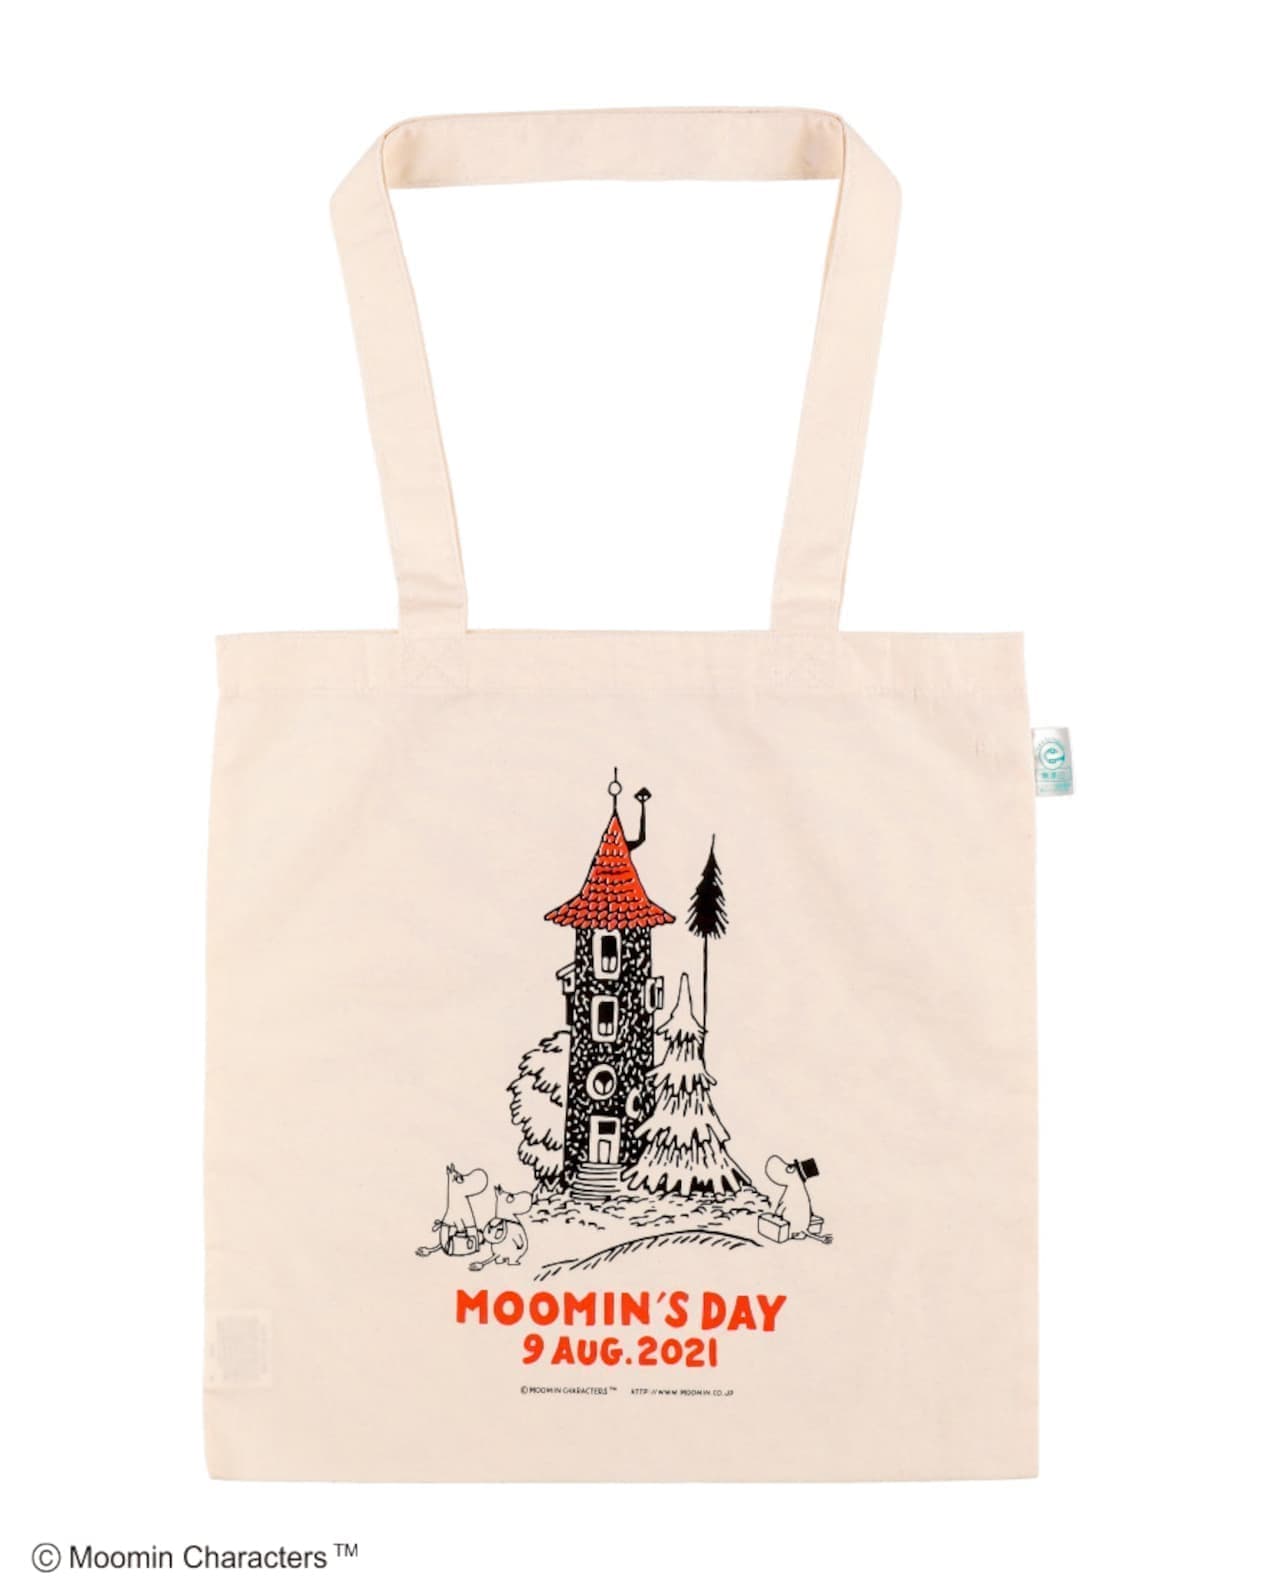 Moomin Cafe “Moomin Day” Commemorative Menu & Goods